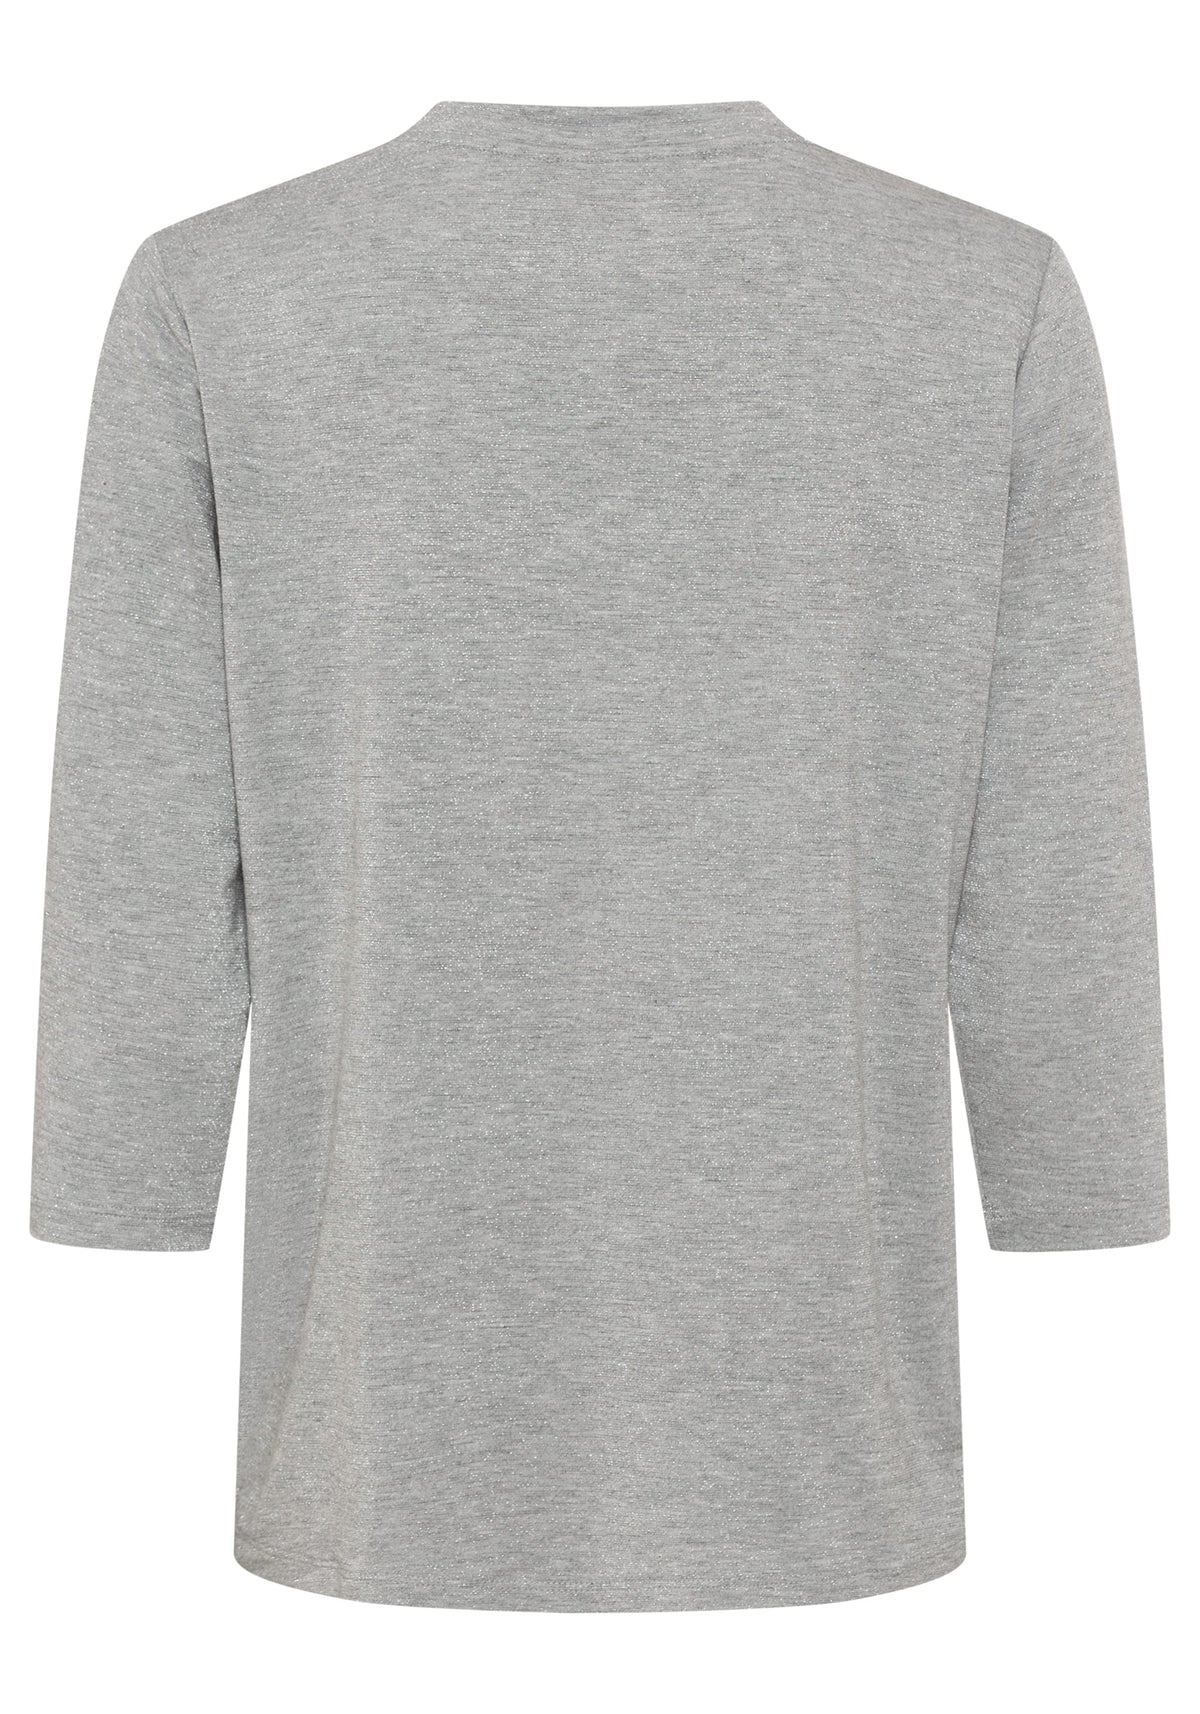 3/4 Sleeve Silver Shimmer V-Neck T-Shirt